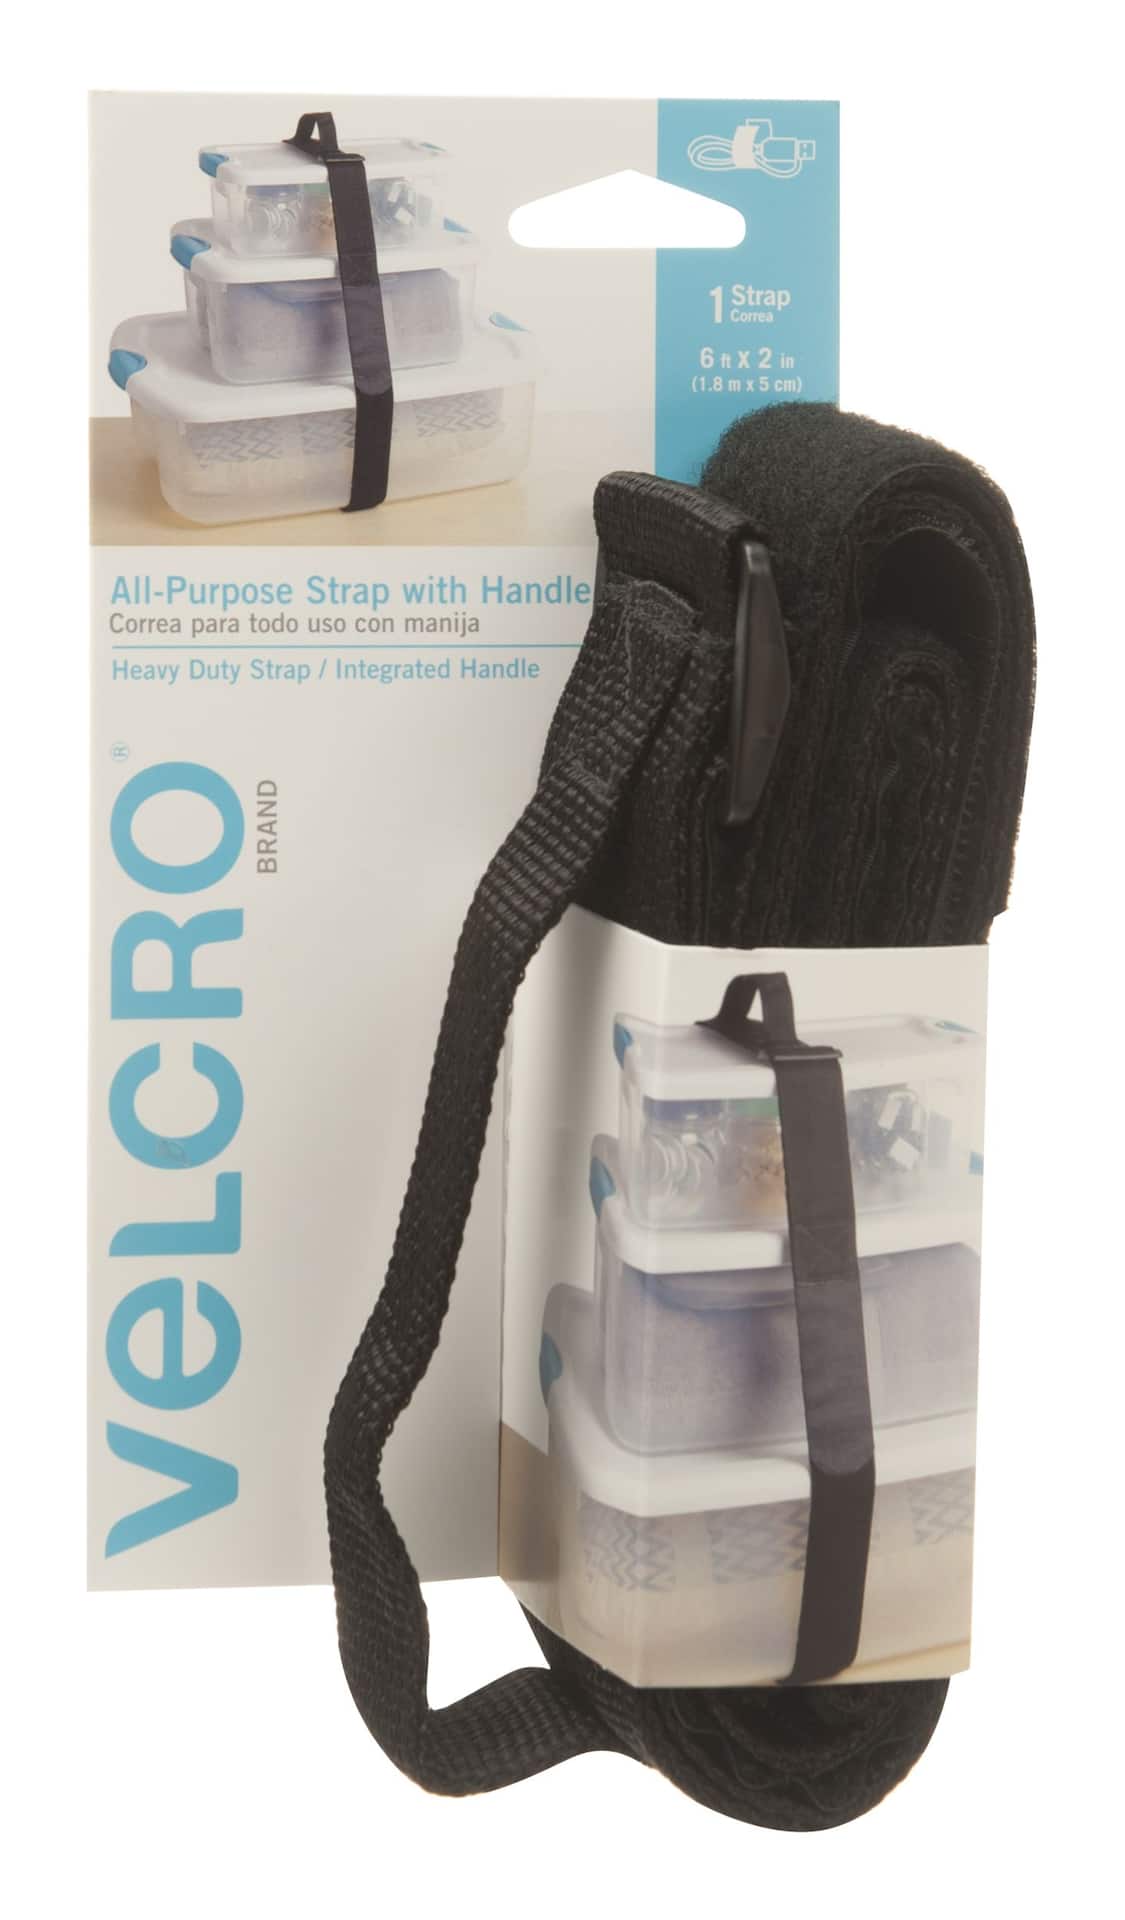 Velcro ONE-WRAP Heavy Duty Nylon Velcro Strap, Black, 12-ft x 3/4